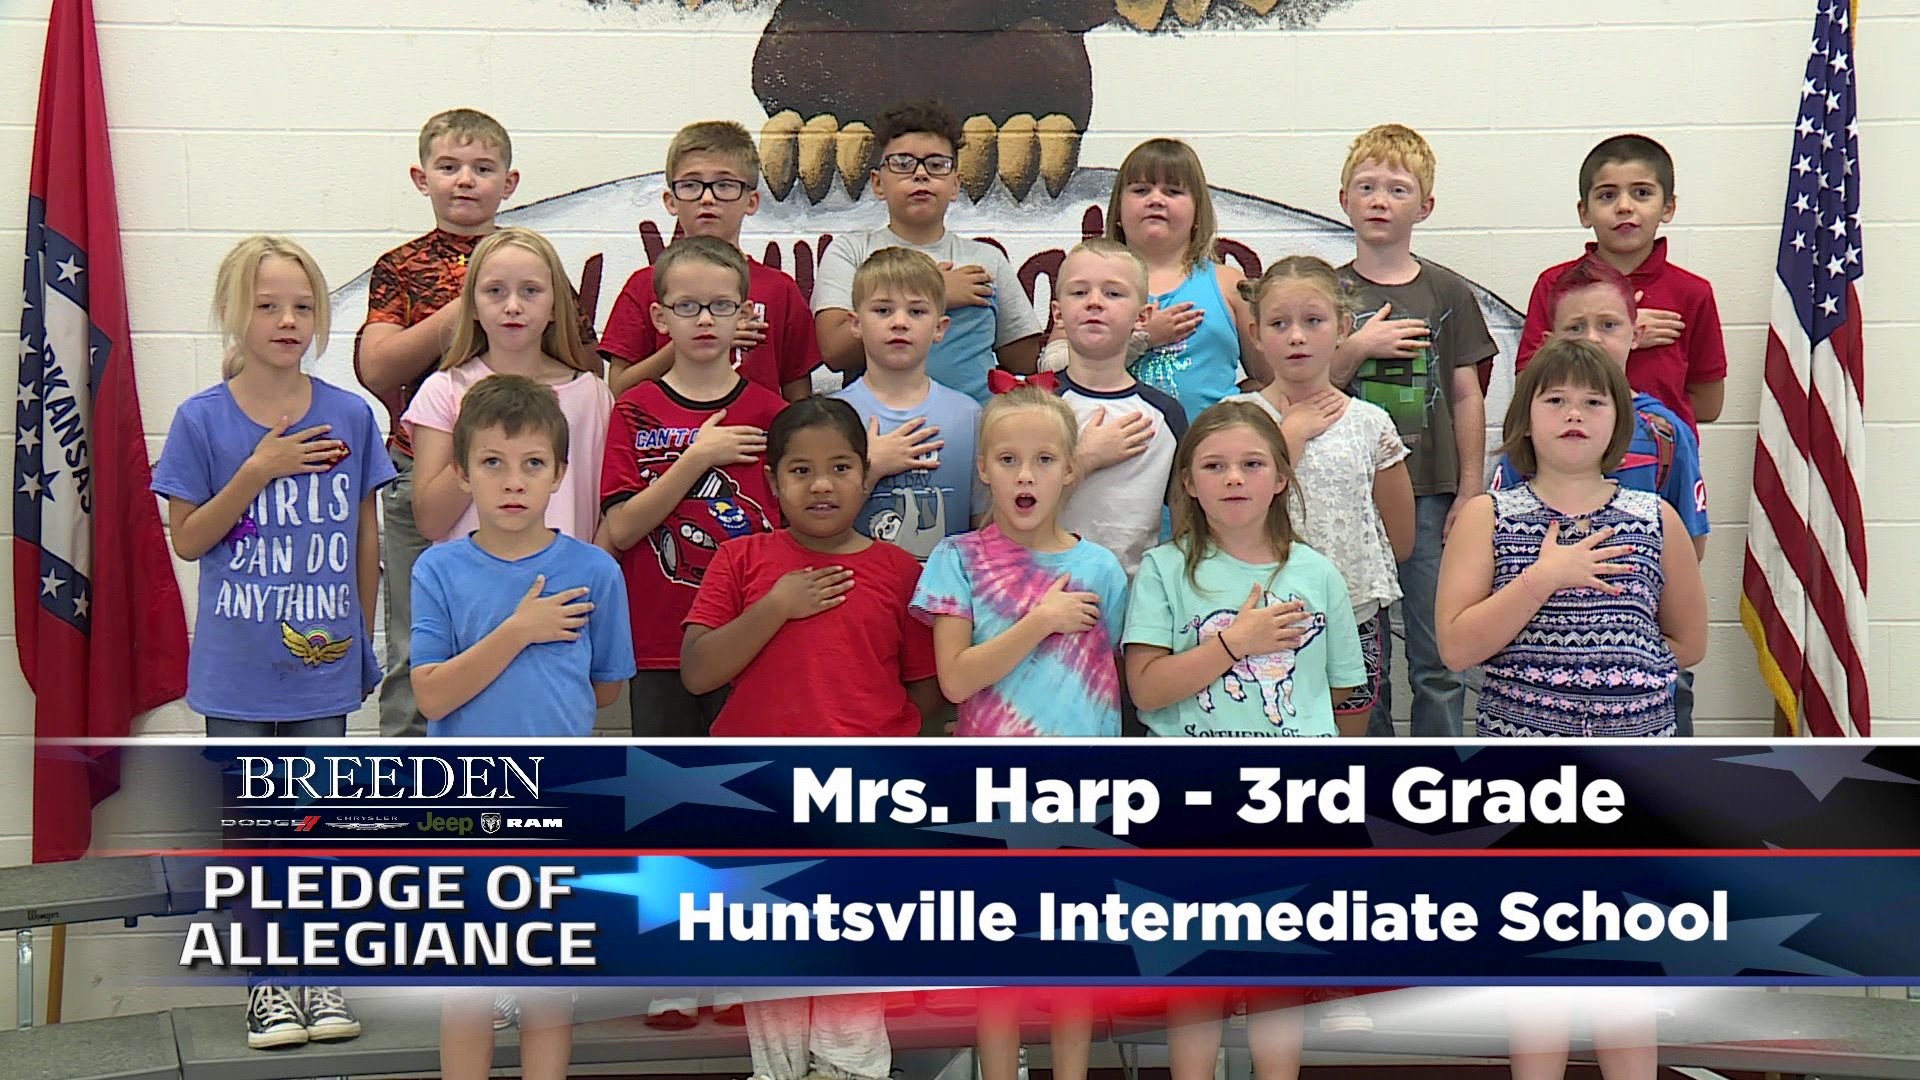 Mrs. Harp - 3rd Grade Huntsville Intermediate School